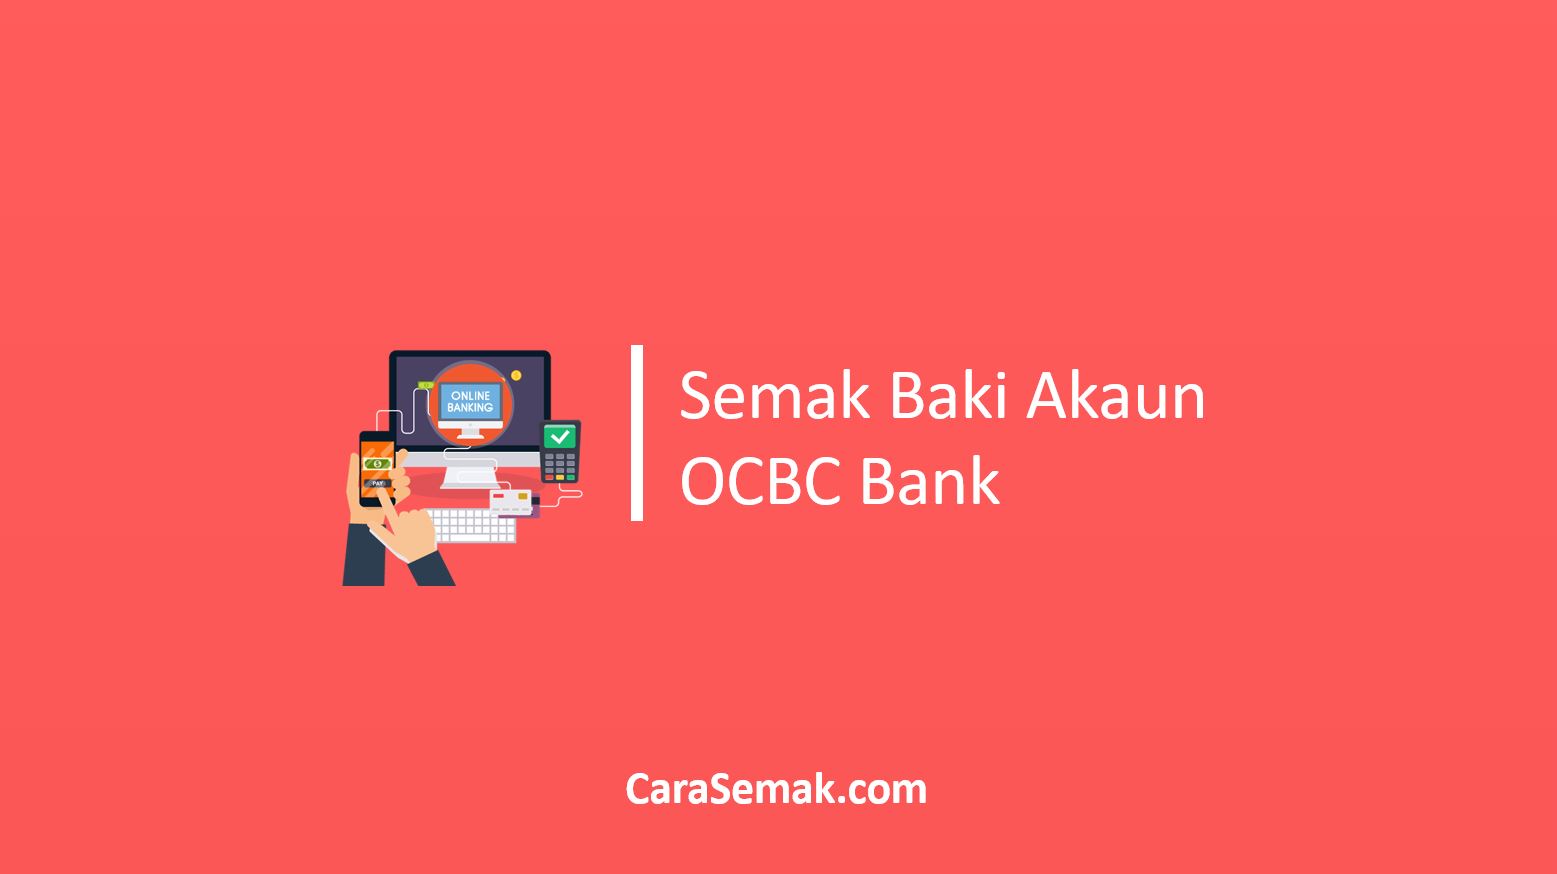 Semak Baki Akaun OCBC Bank